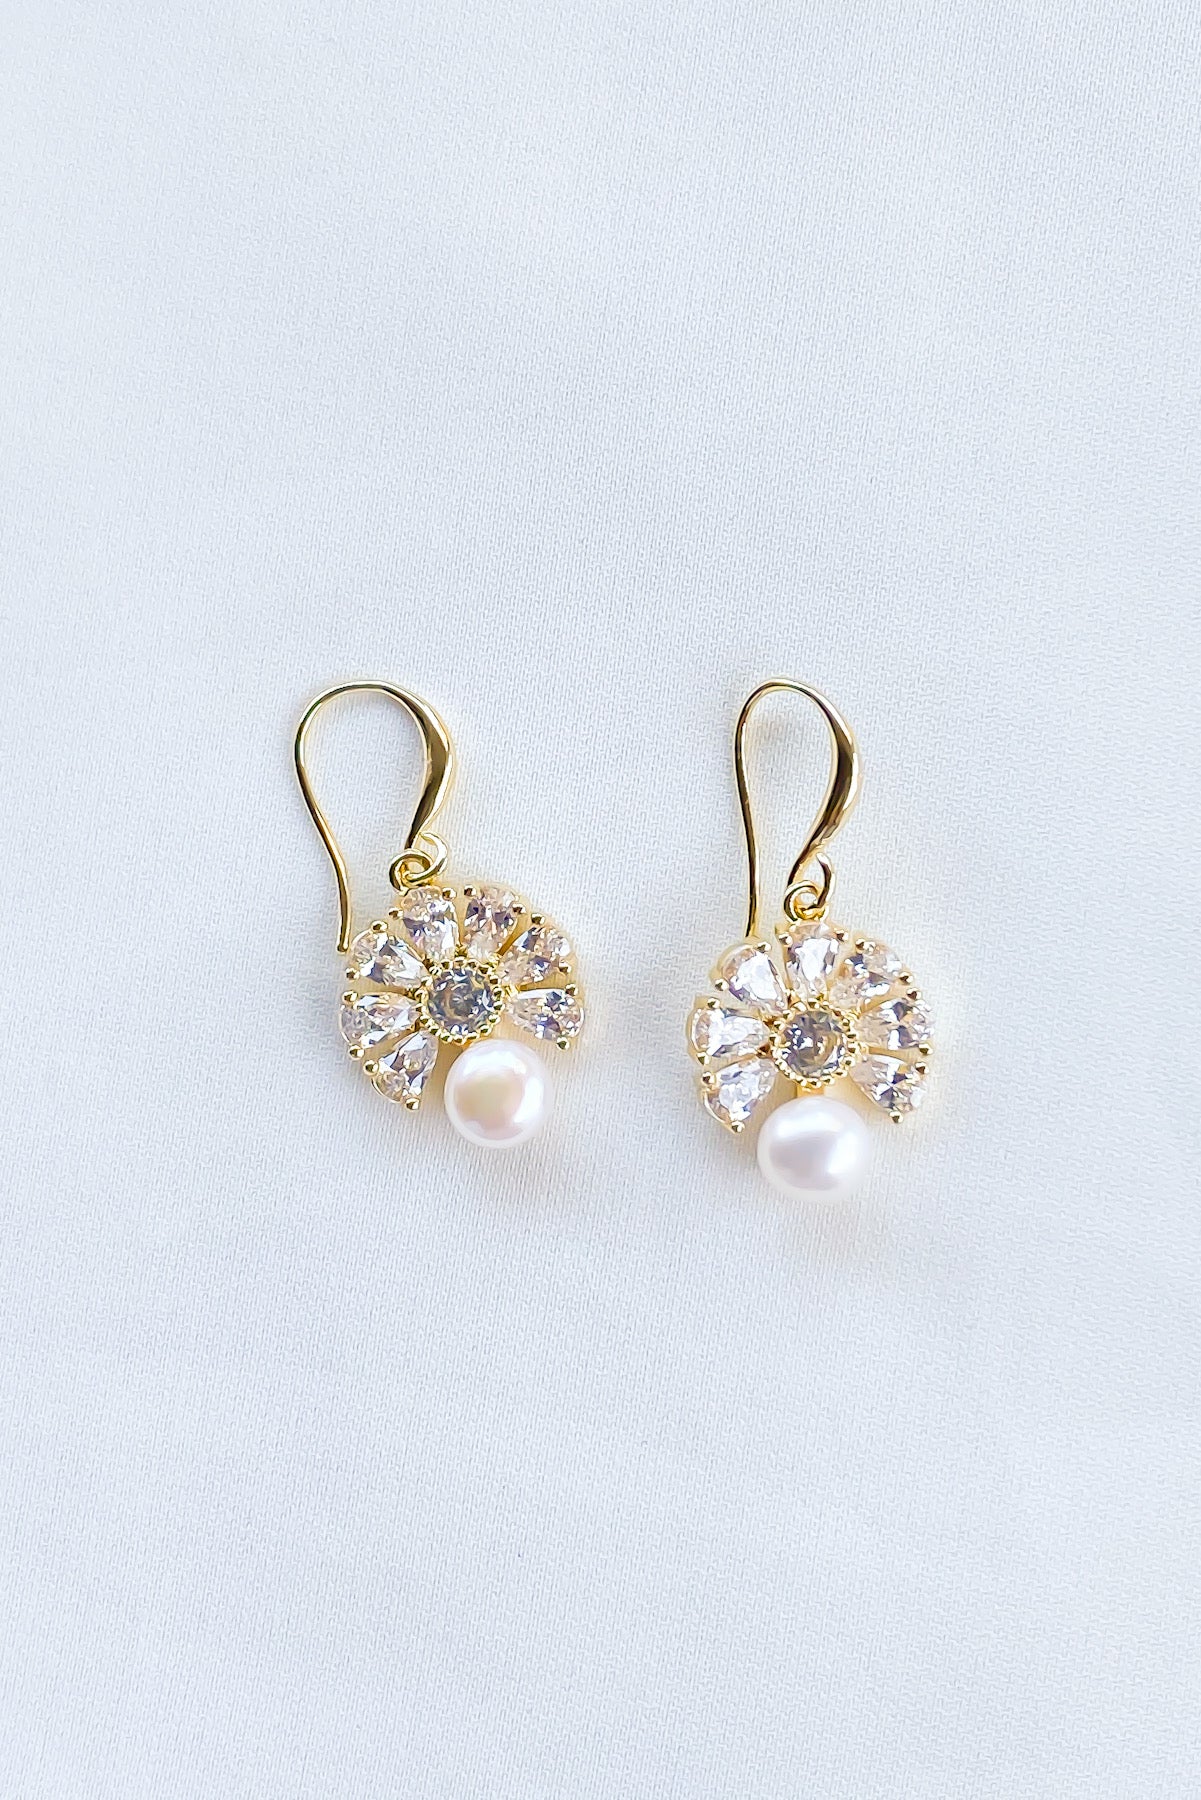 SKYE San Francisco Shop SF Chic Modern Elegant Classy Women Jewelry French Parisian Minimalist Lyna 18K Gold Freshwater Pearl Crystal Earrings